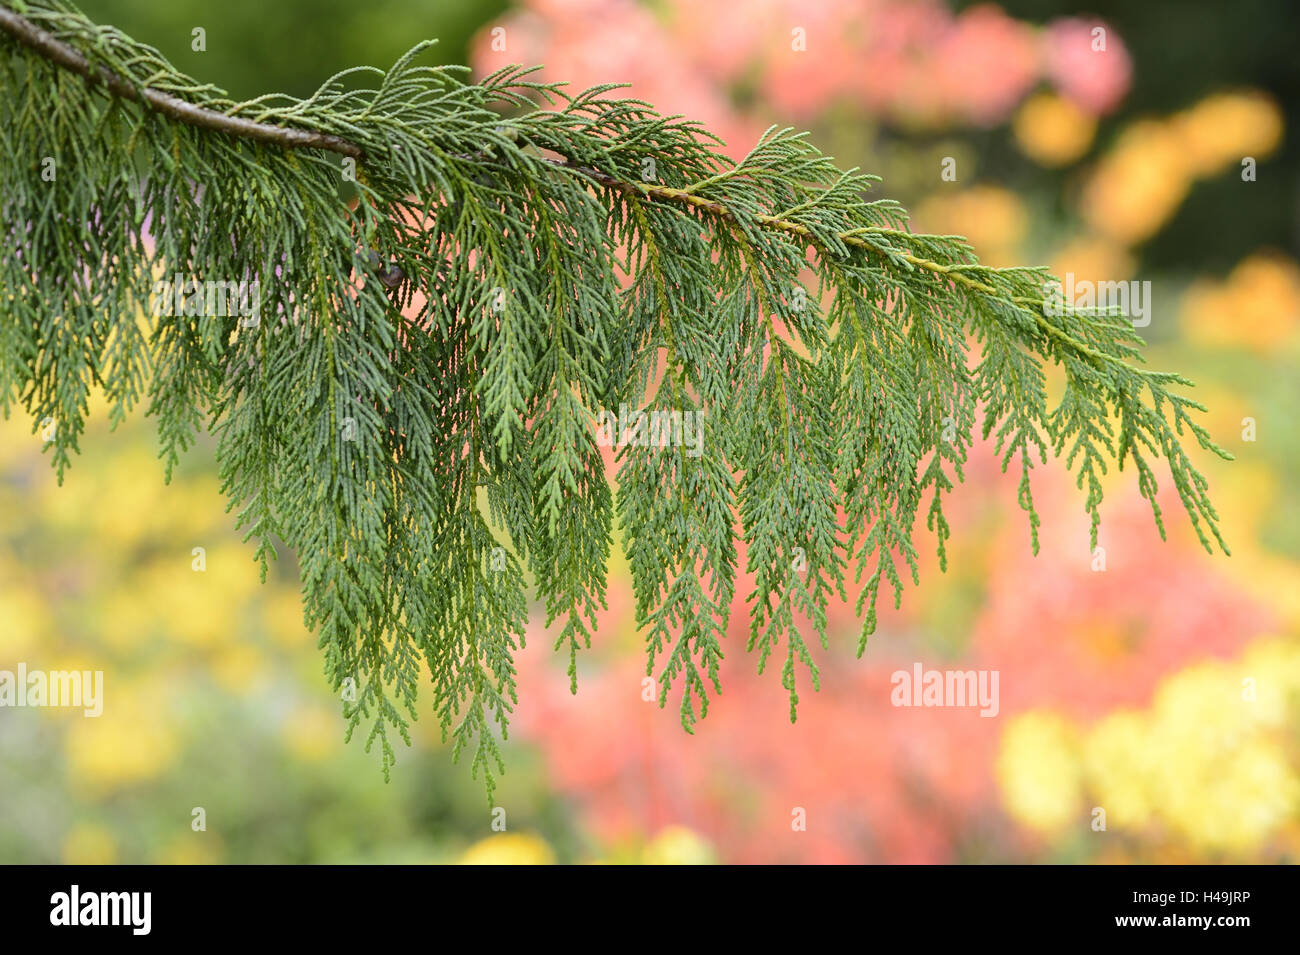 Western life tree, Thuja occidentalis, fork, Stock Photo